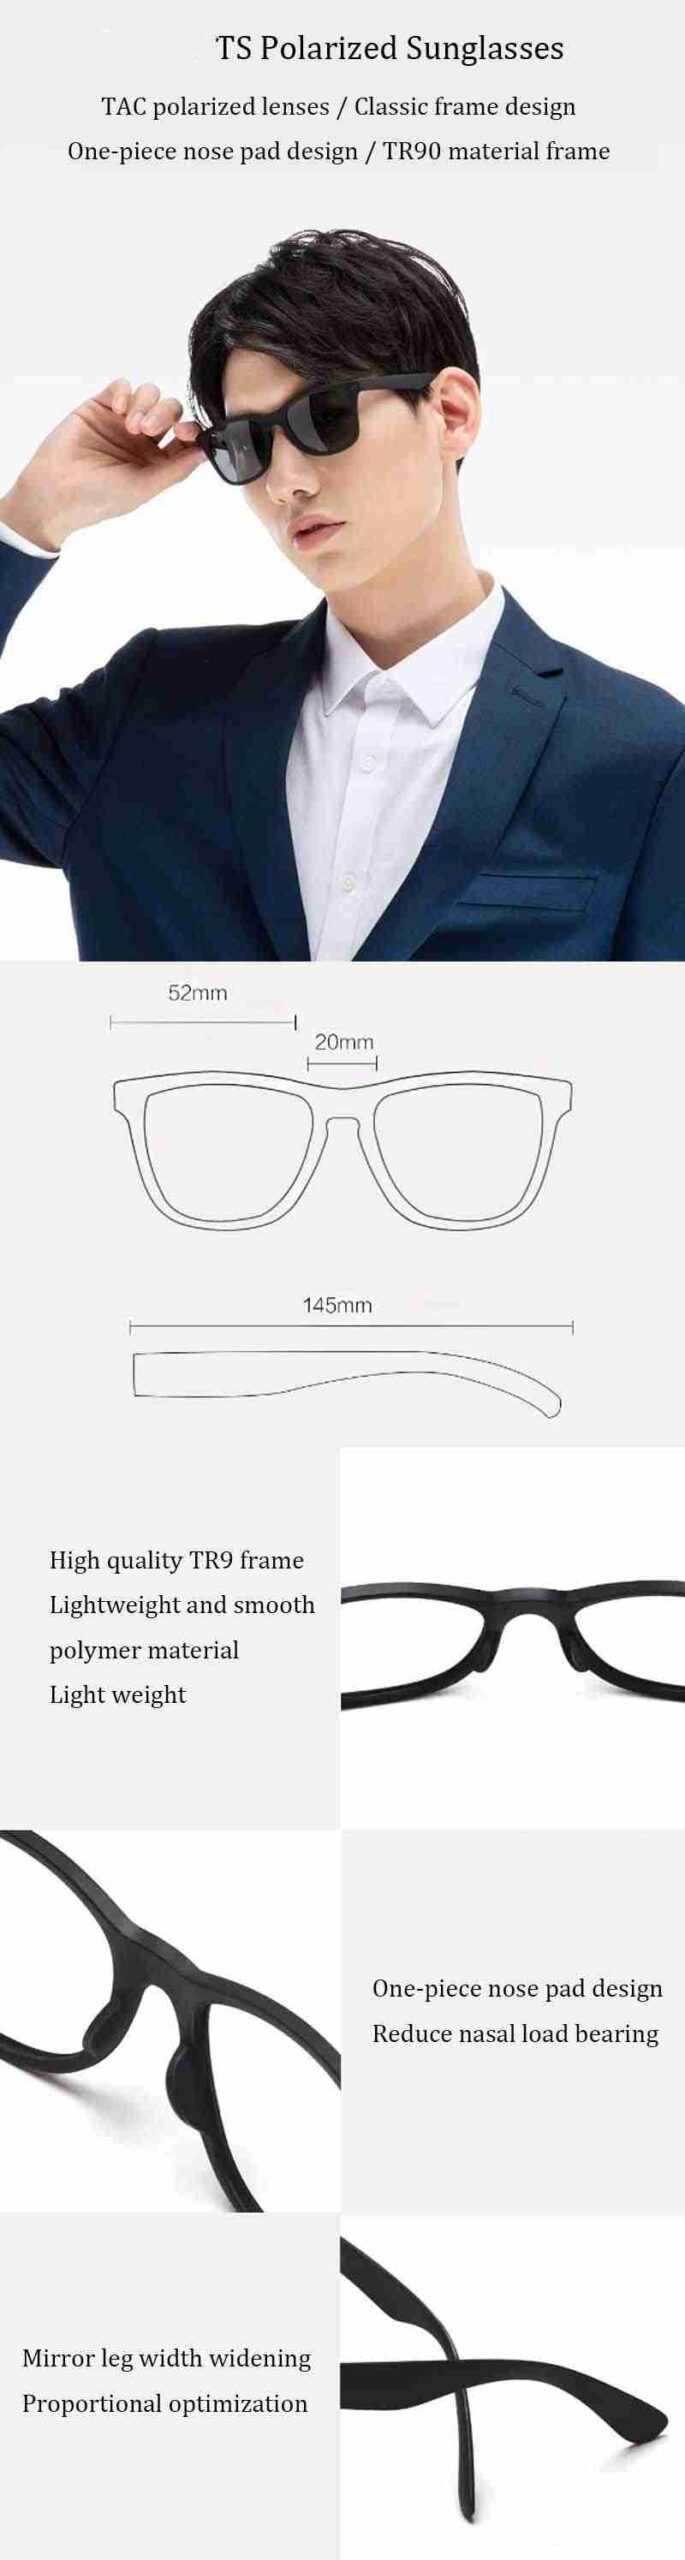 Xiaomi Mi Polarized Explorer Sunglasses review